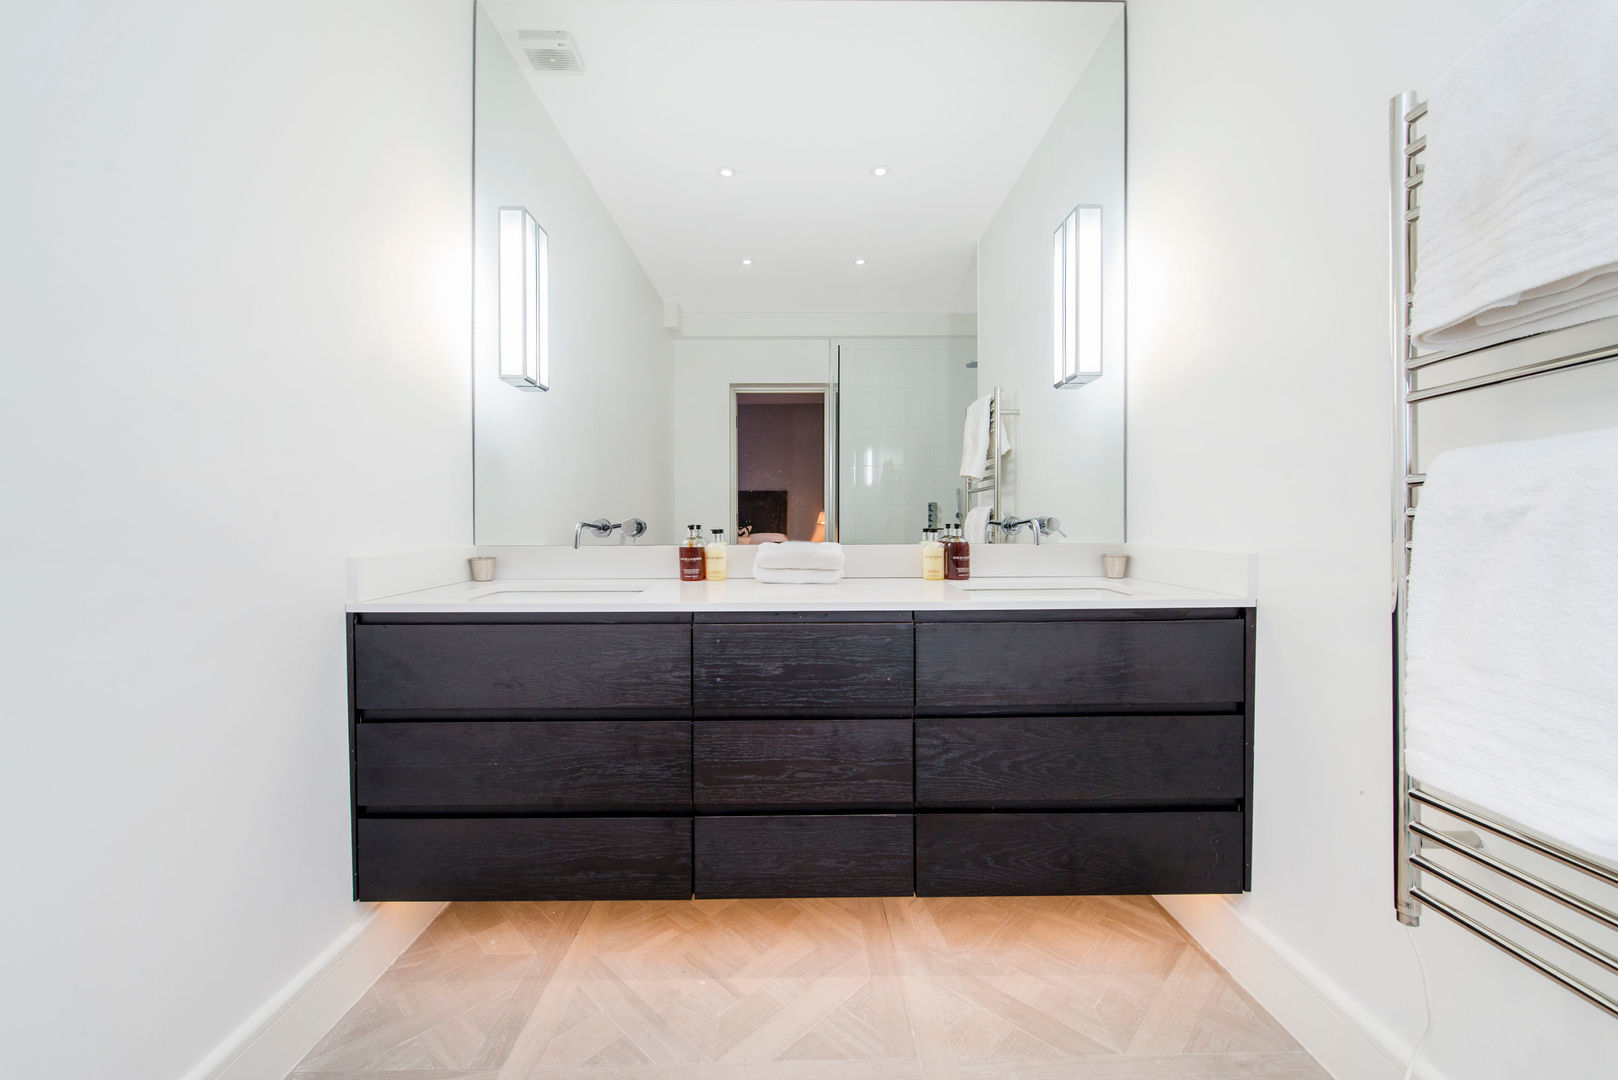 Parquet flooring and underlit counters Balance Property Ltd Modern bathroom